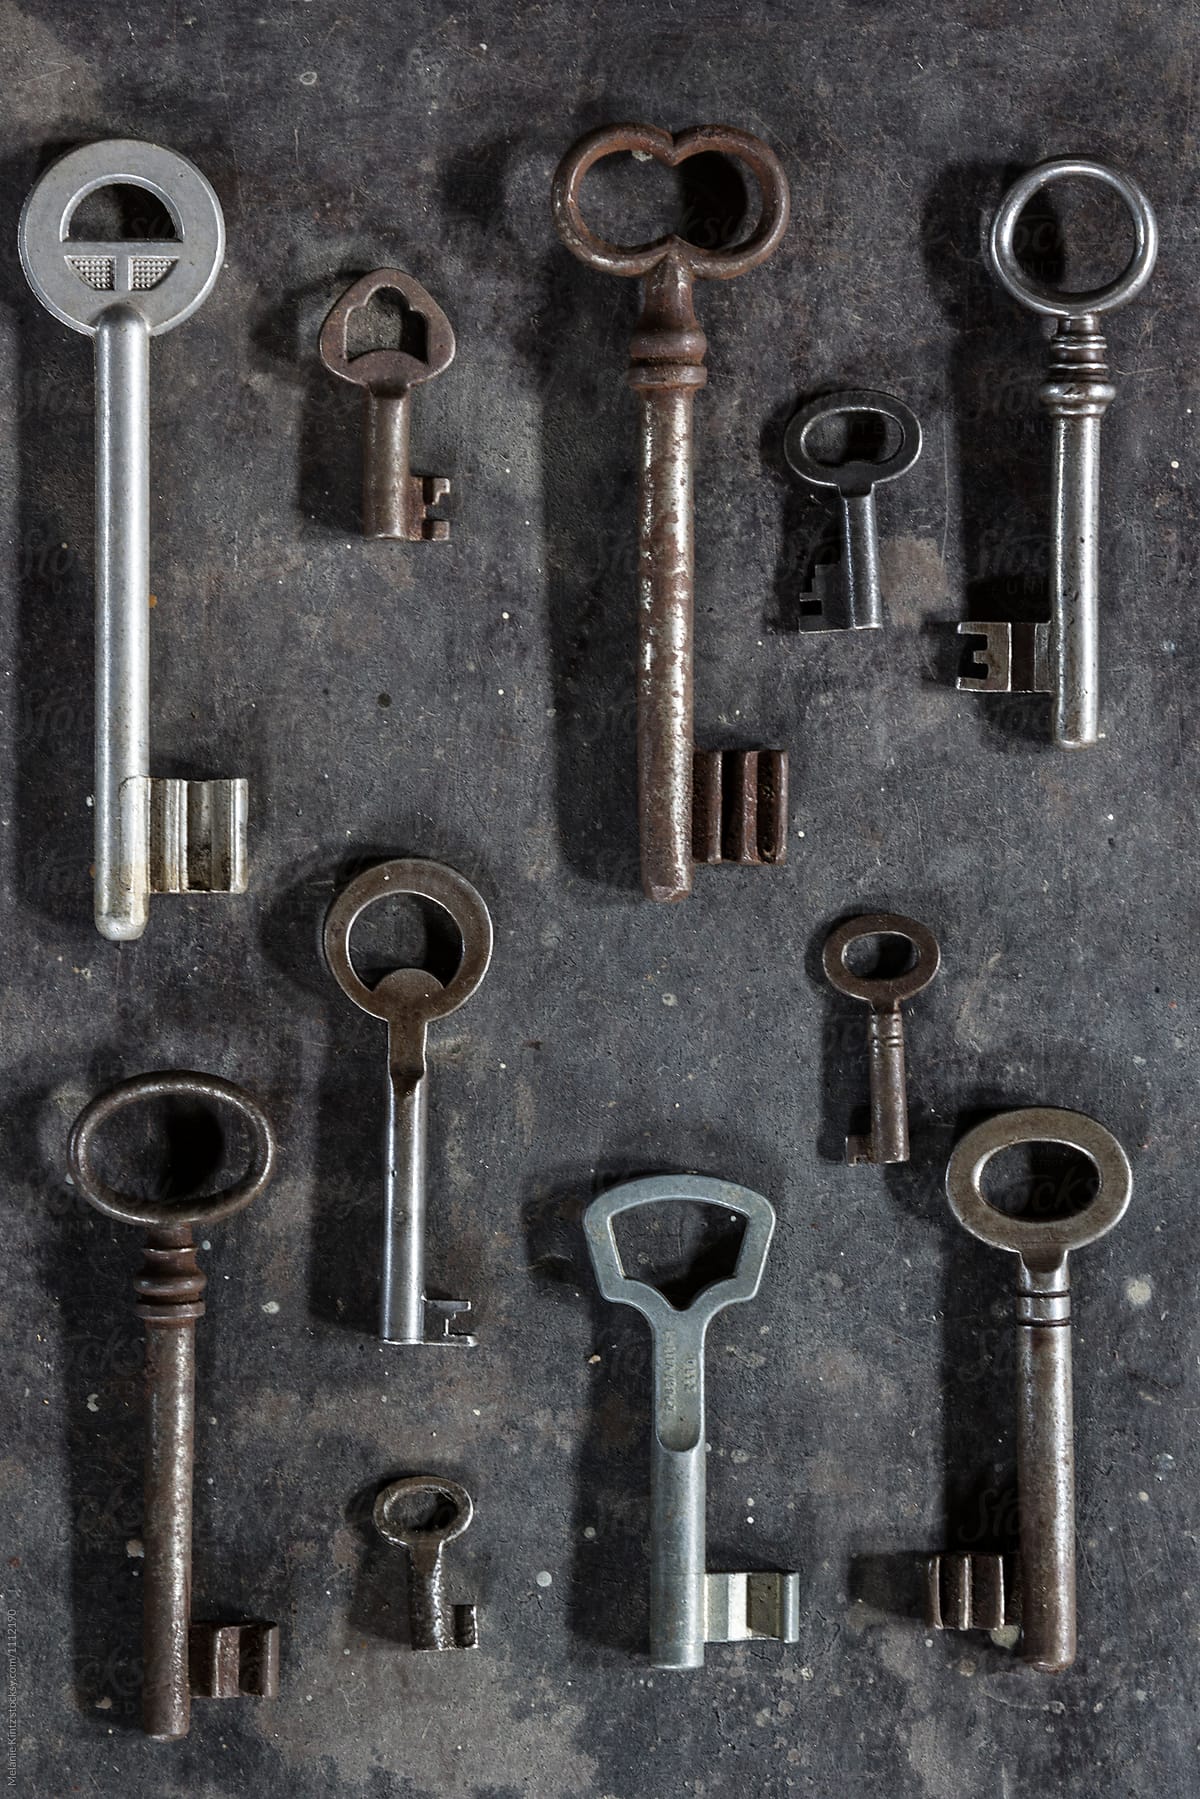 Many old keys on dark metal background